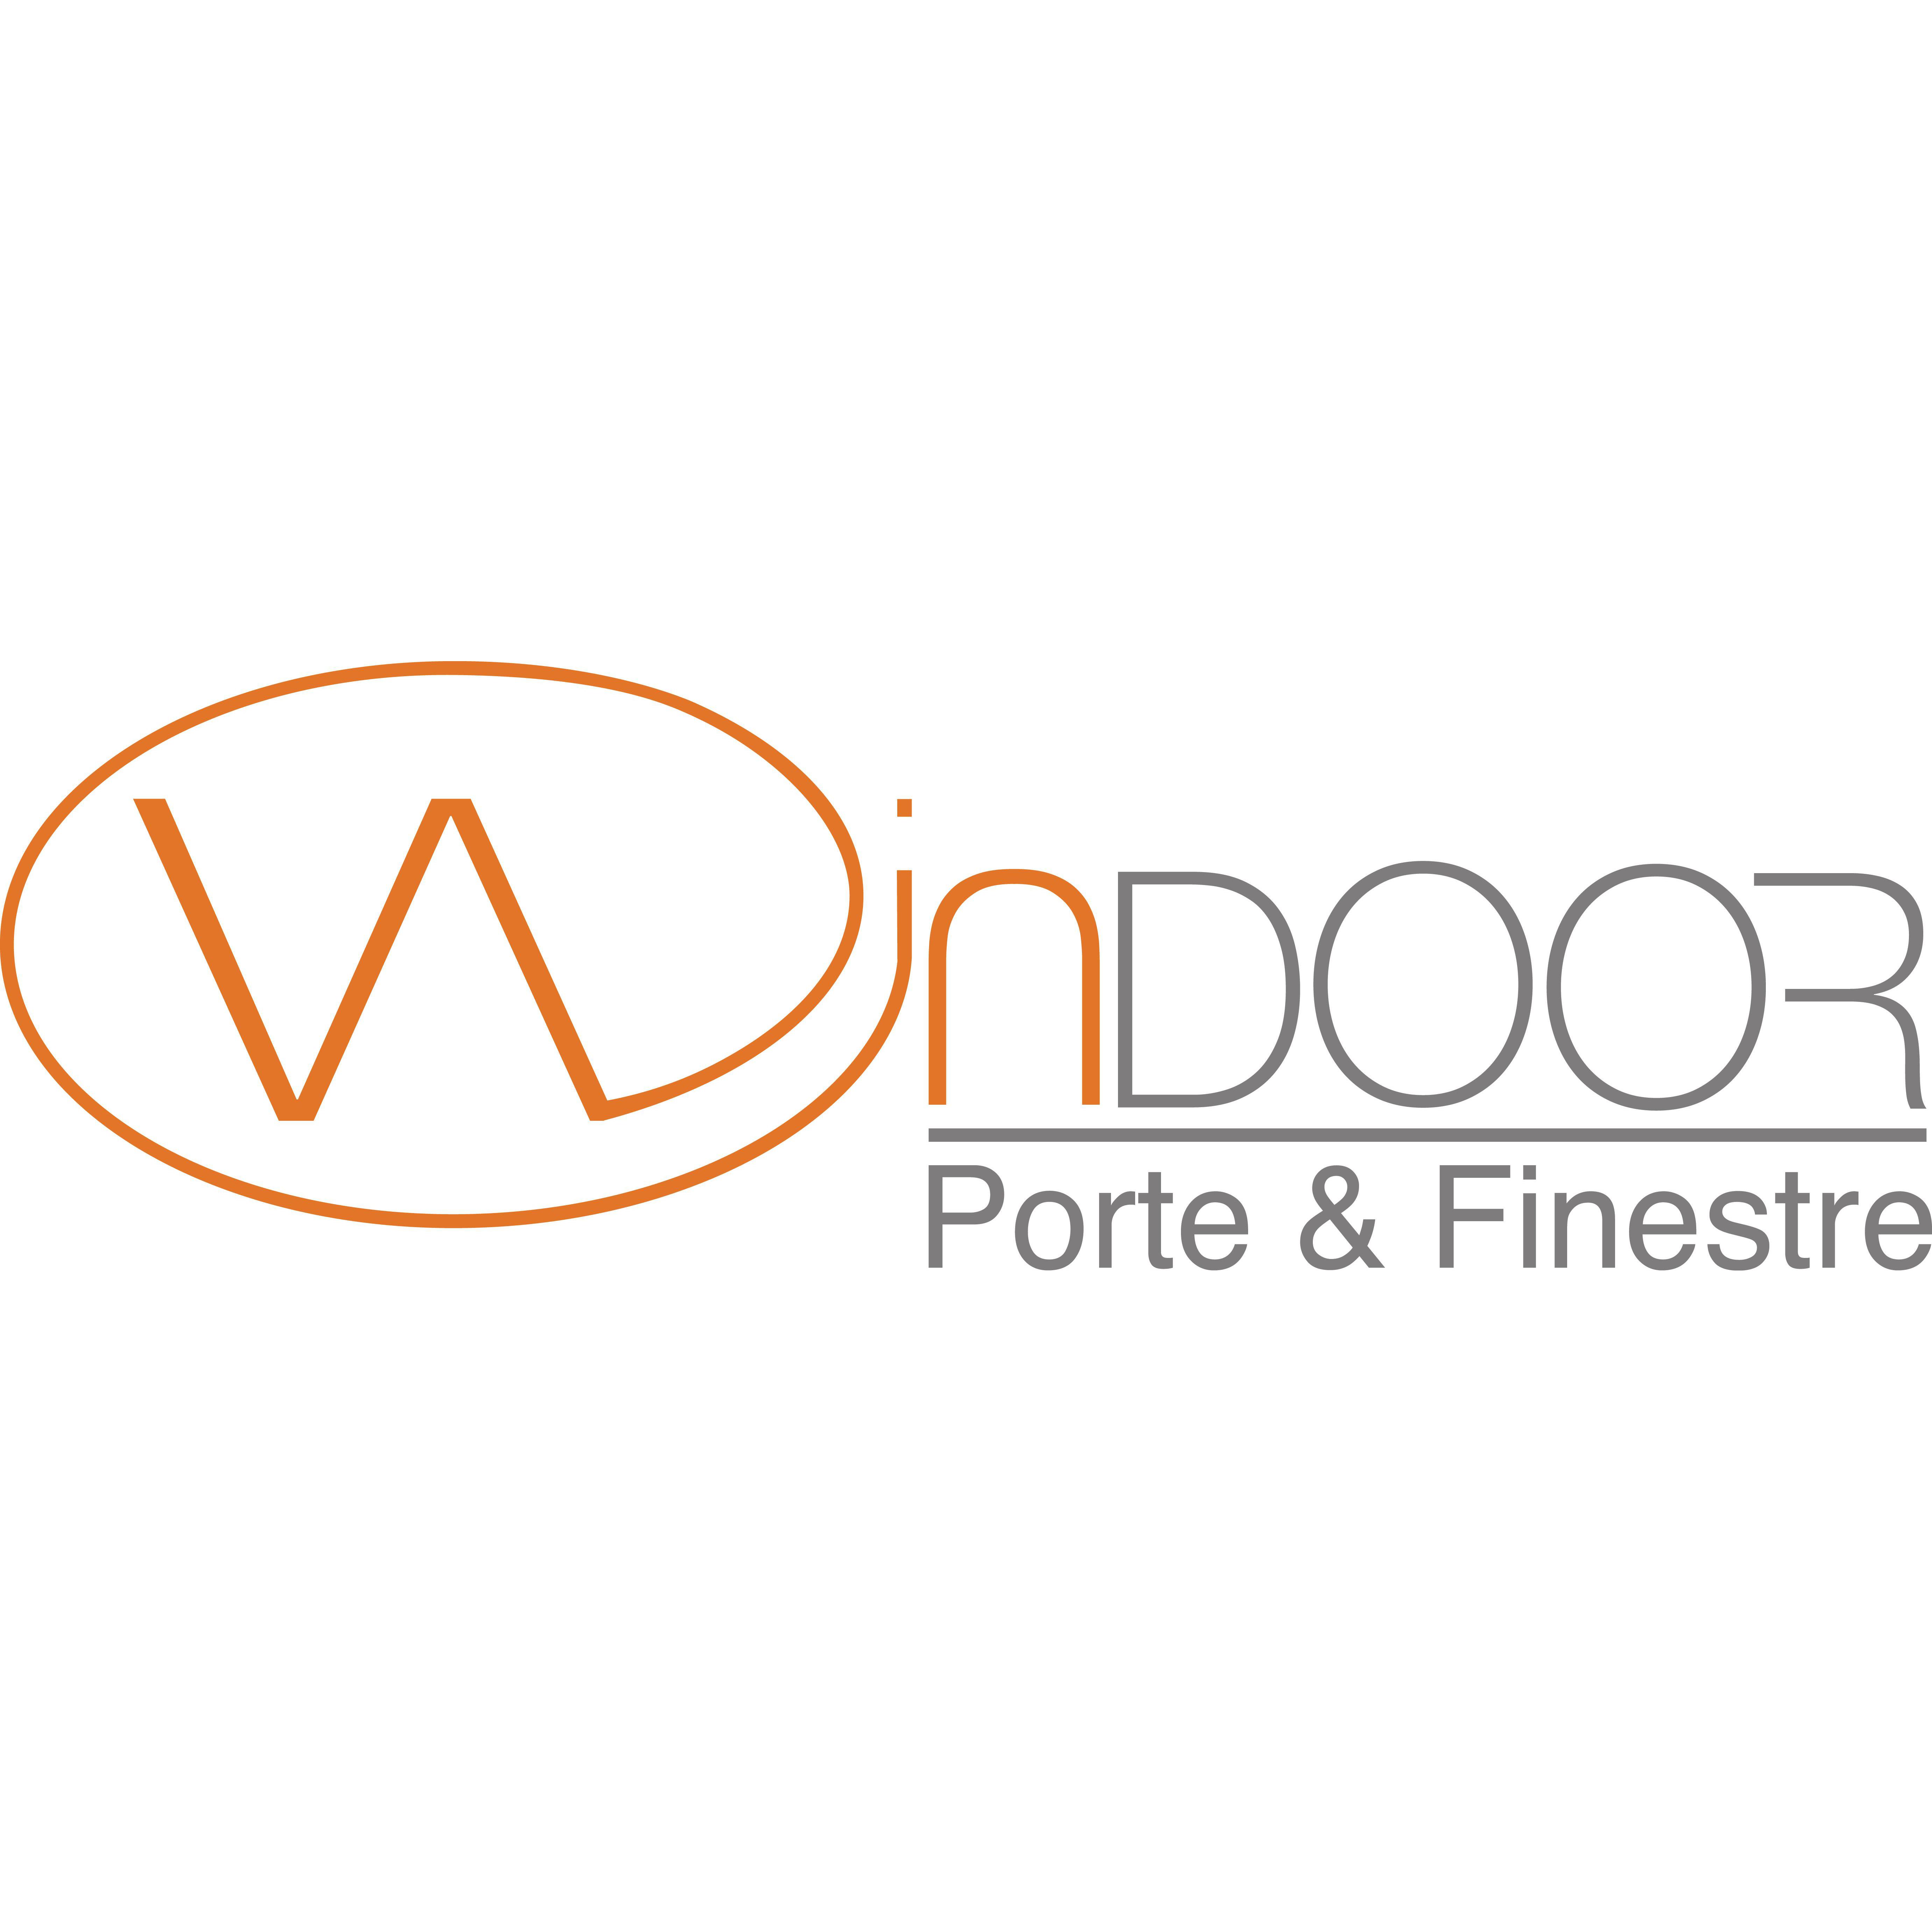 Windoor Porte & Finestre Sagl Logo